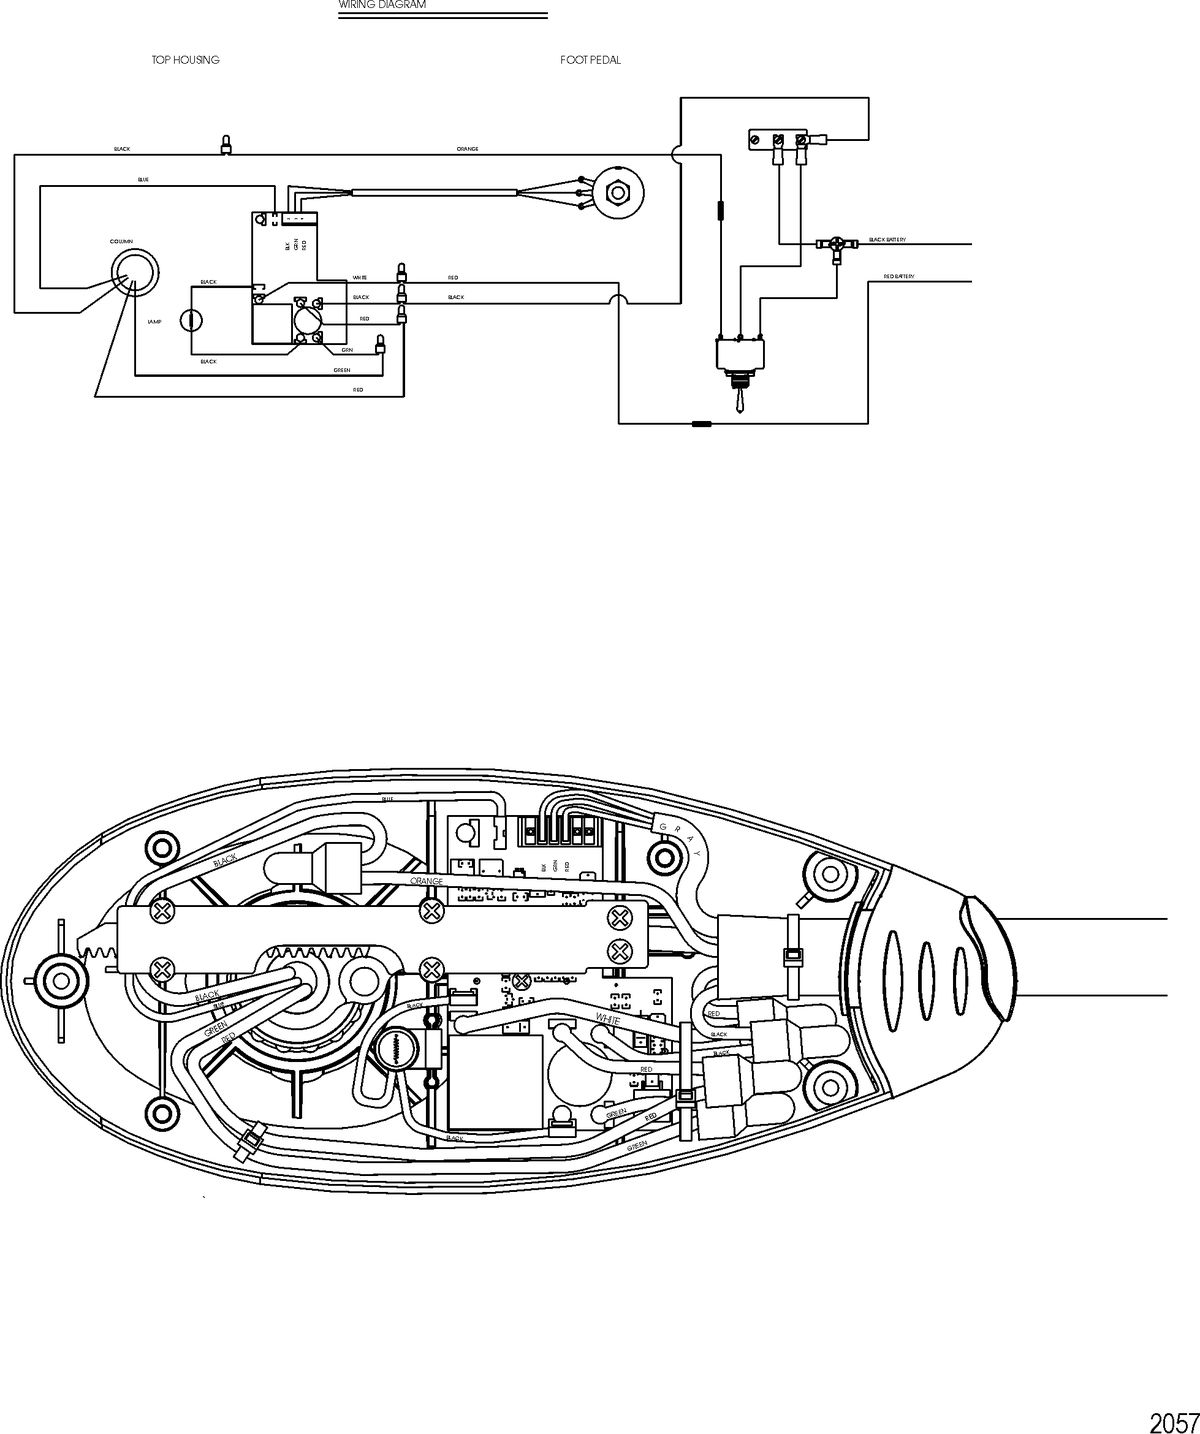 TROLLING MOTOR MOTORGUIDE FRESH WATER SERIES Wire Diagram(Model FW54FBV)